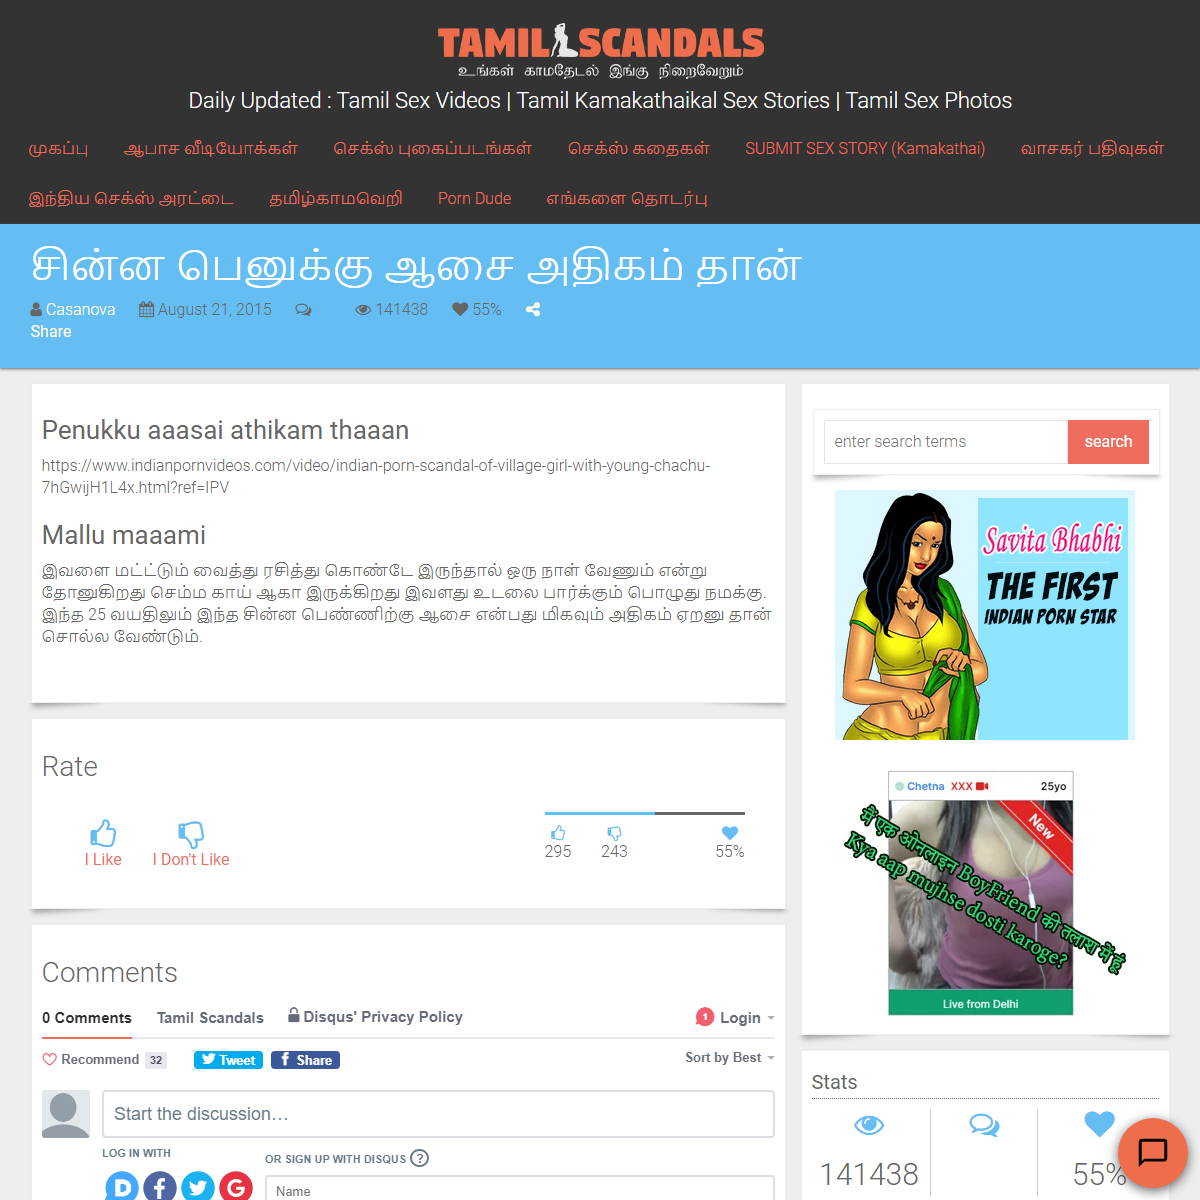 A complete backup of https://www.tamilscandals.com/hairy-2/mallu-baadu/